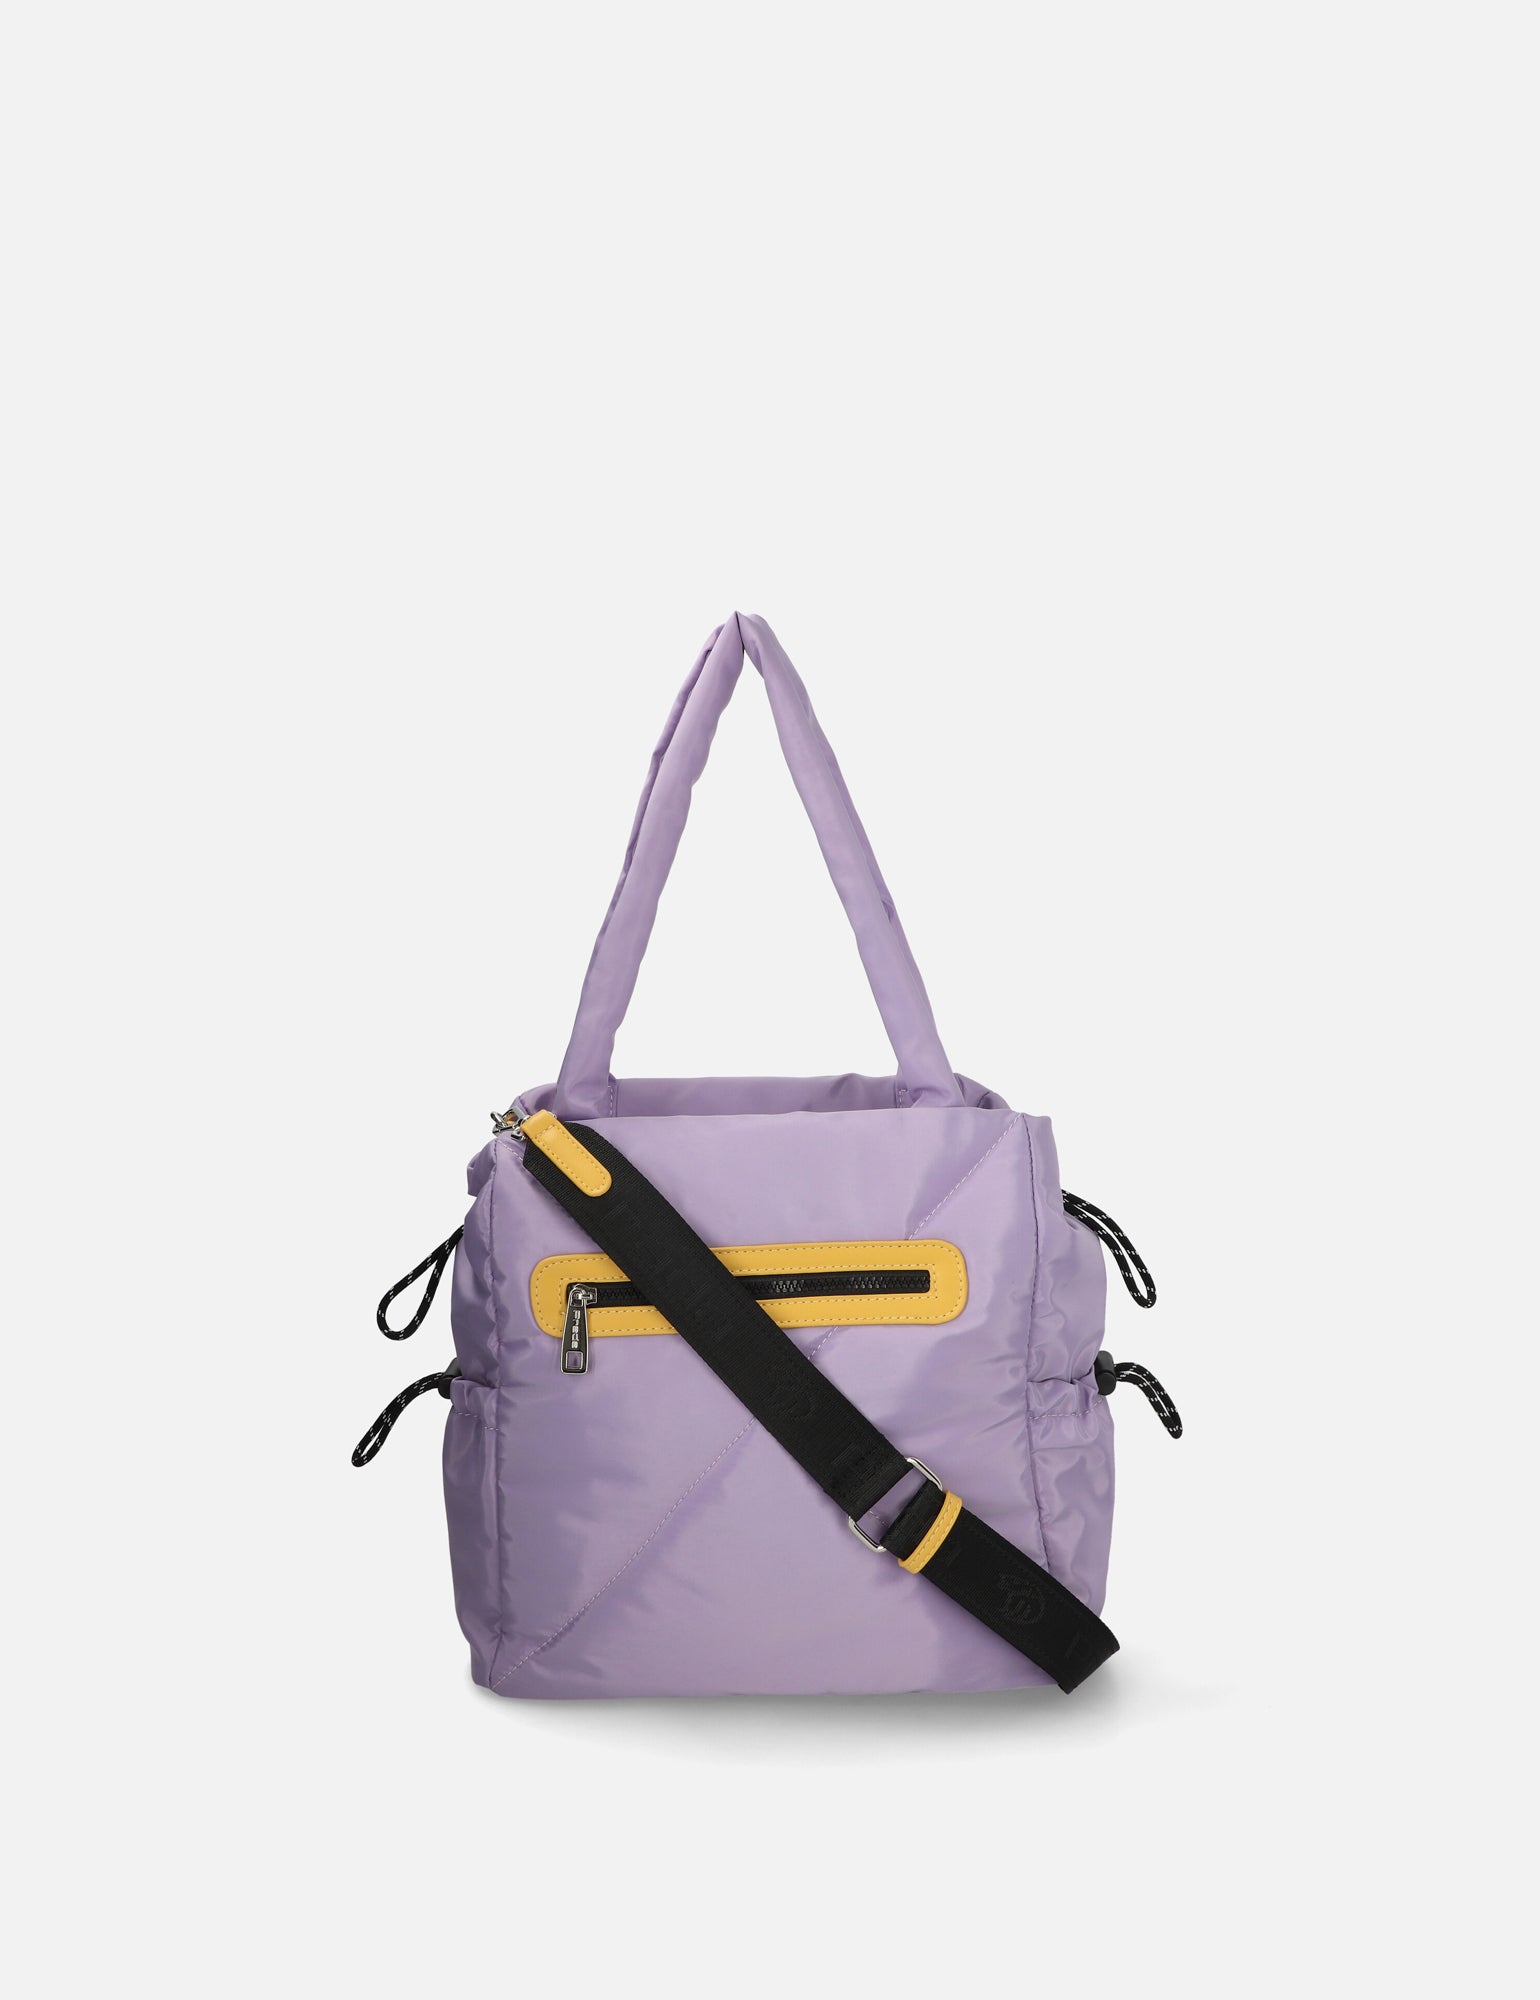 Shoping bag en nylon capitonado color lila